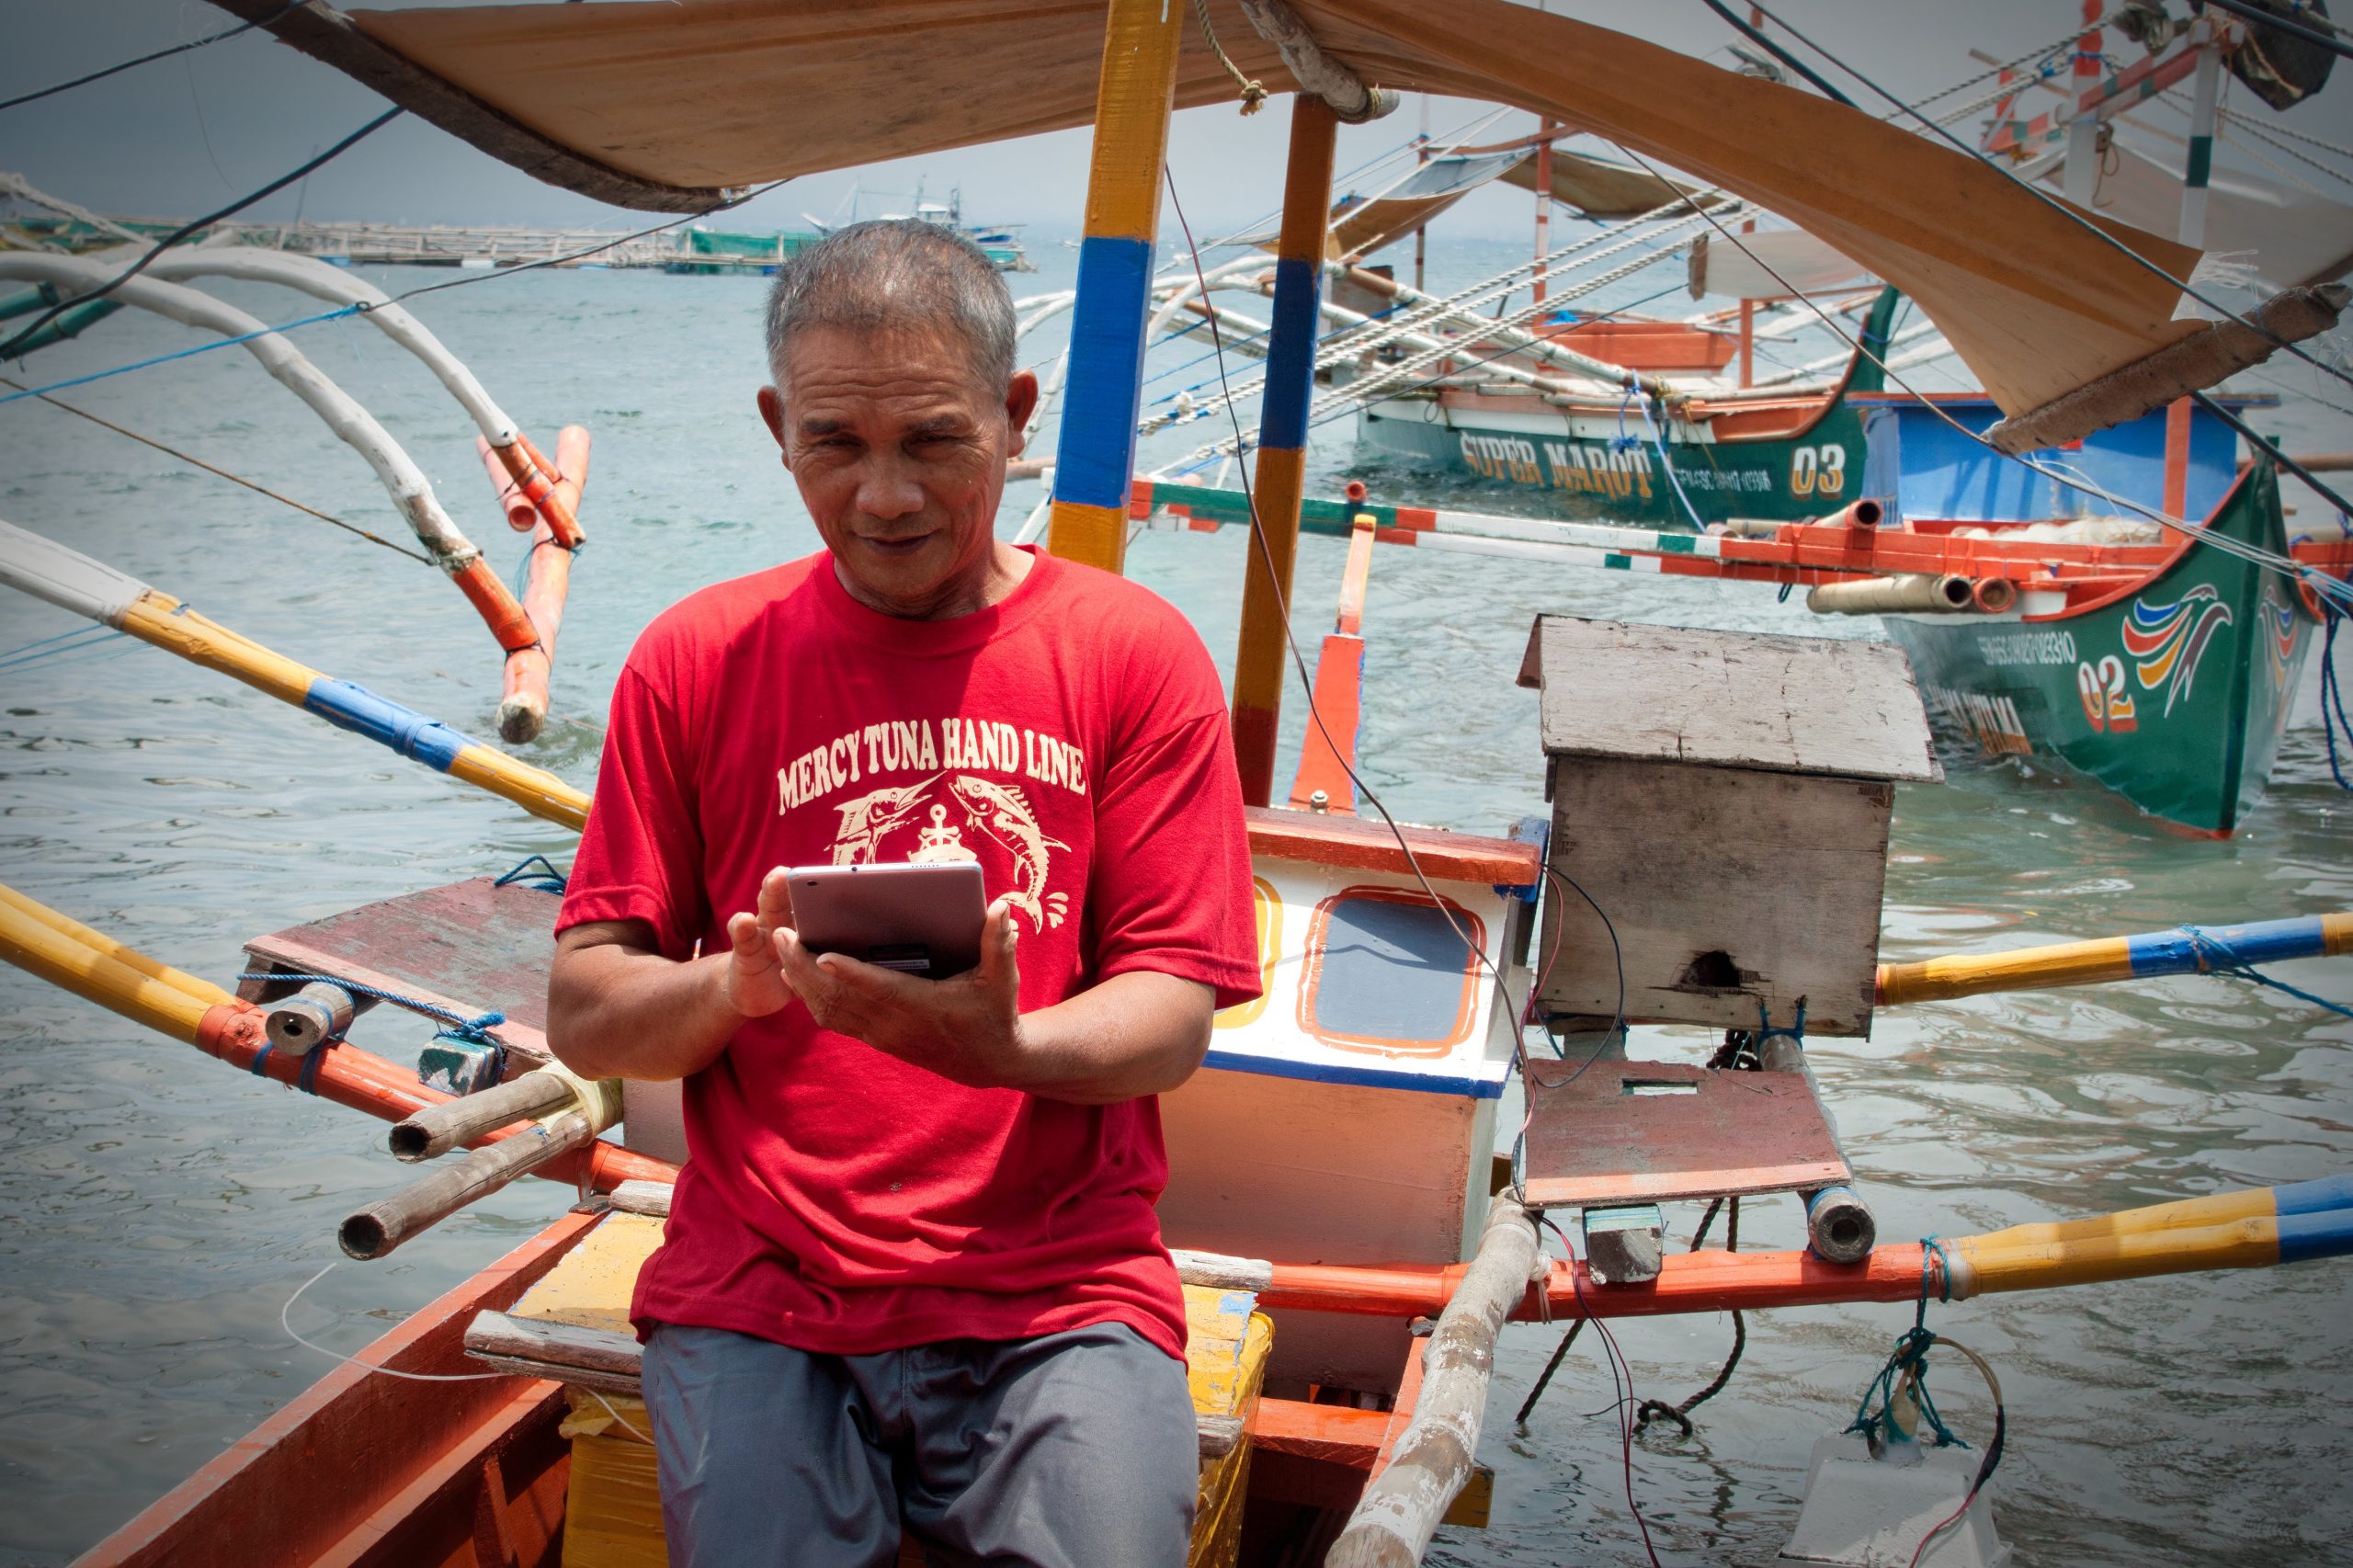 Tuna fisherman enters data on tuna catch with digital device